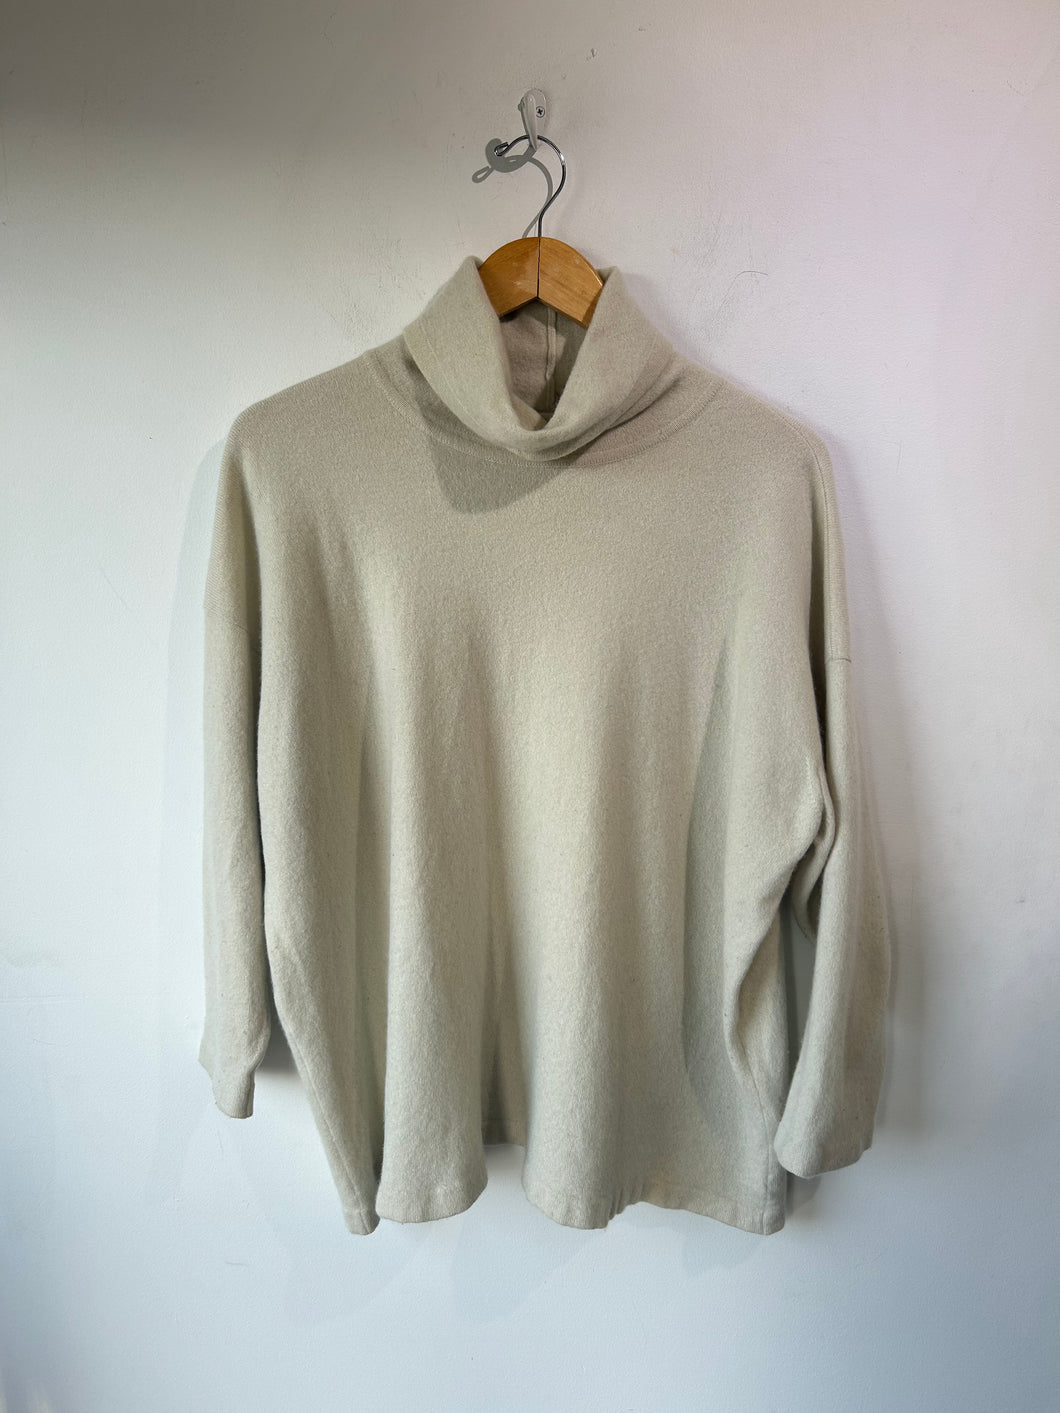 Vintage Eskandar White Cashmere Turtleneck Sweater